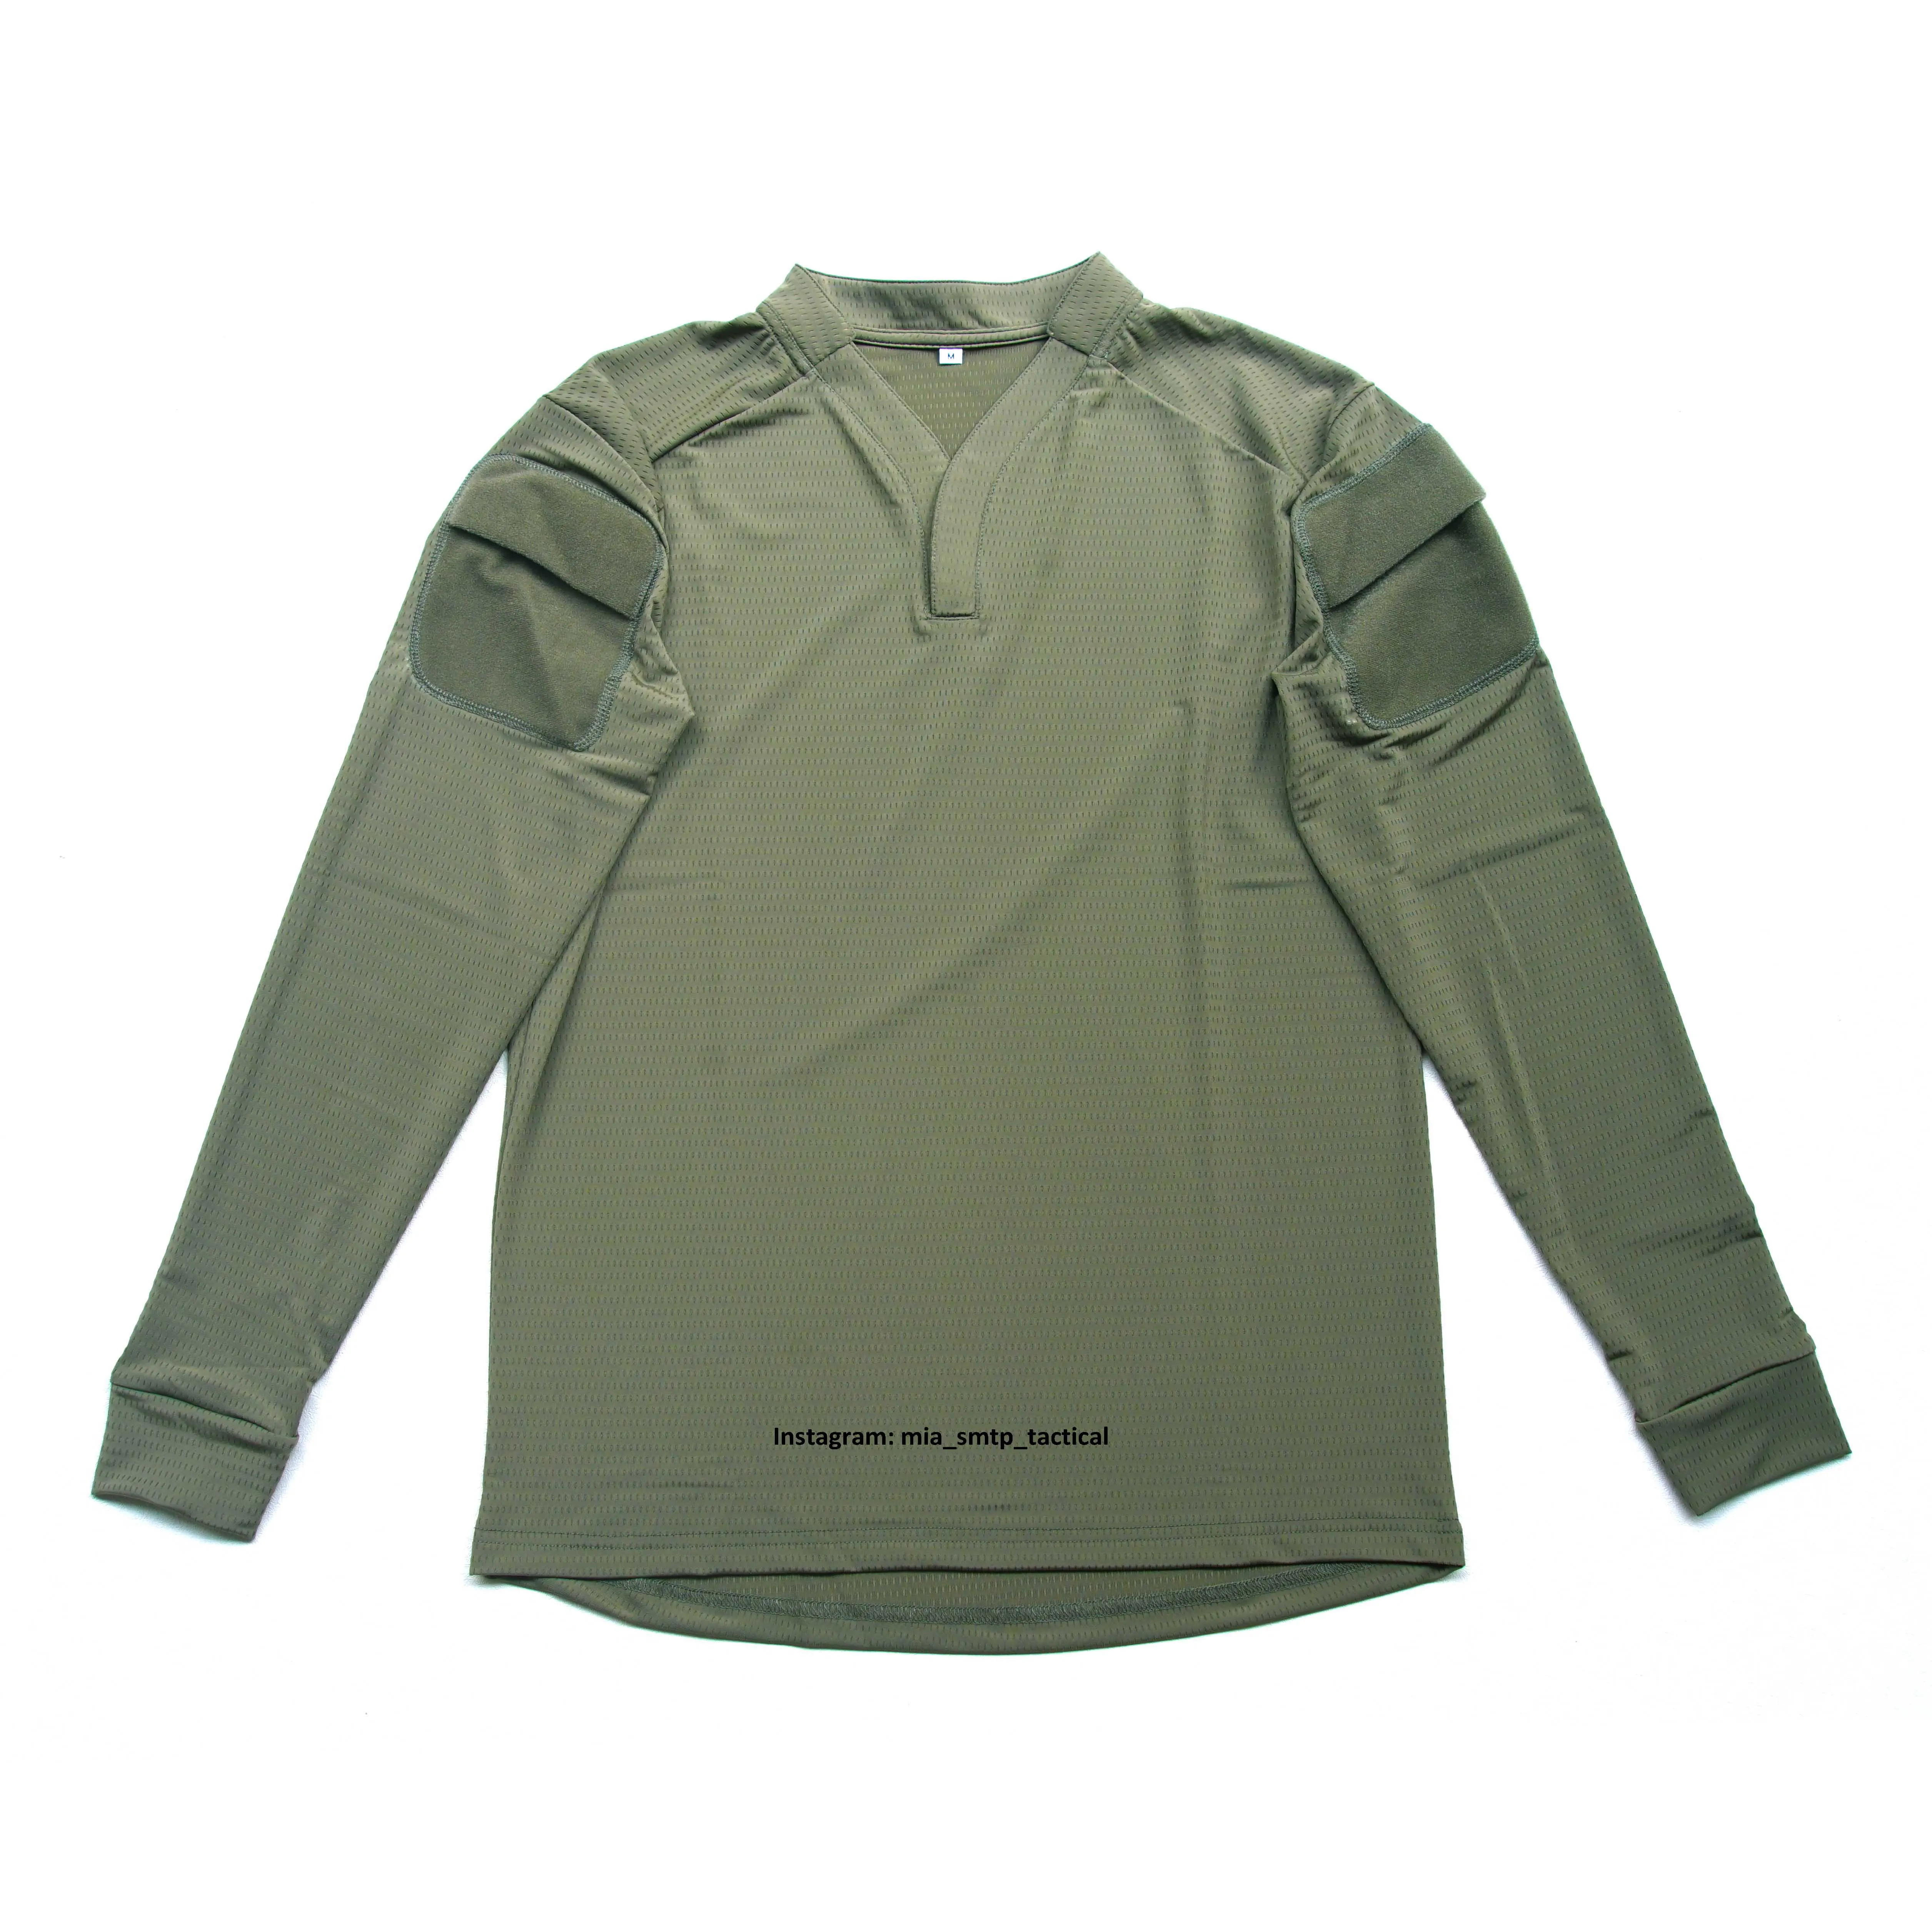 SMTP002 Long Sleeves VS Shirt VS Tactical Combat Shirt Men Cotton